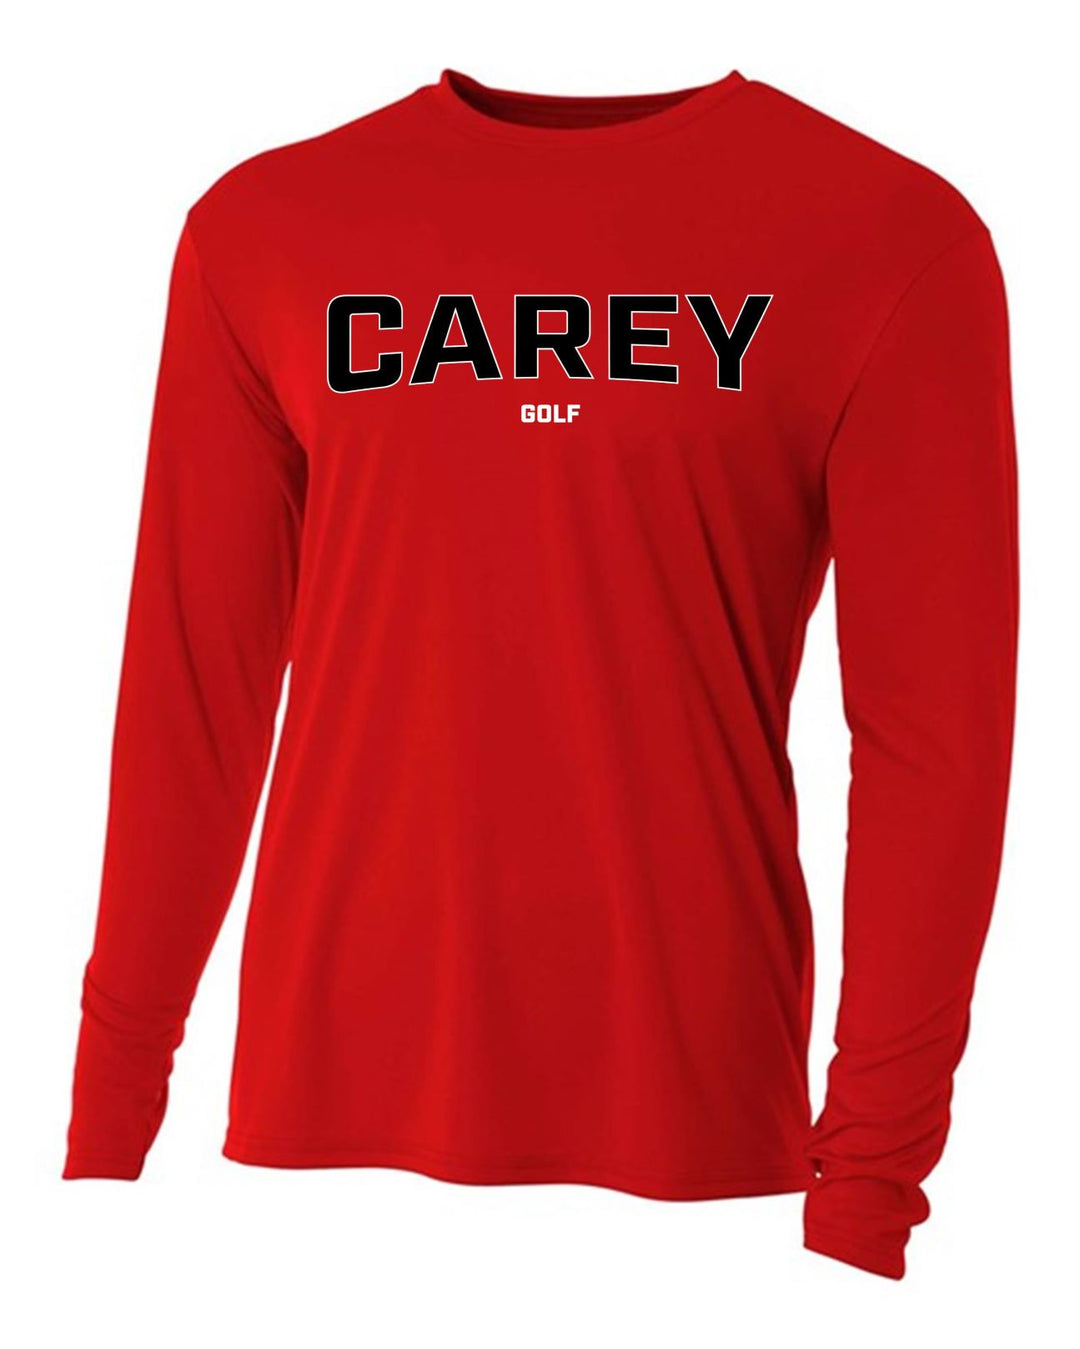 WCU Golf Men's Long-Sleeve Performance Shirt WCU Golf Red CAREY - Third Coast Soccer